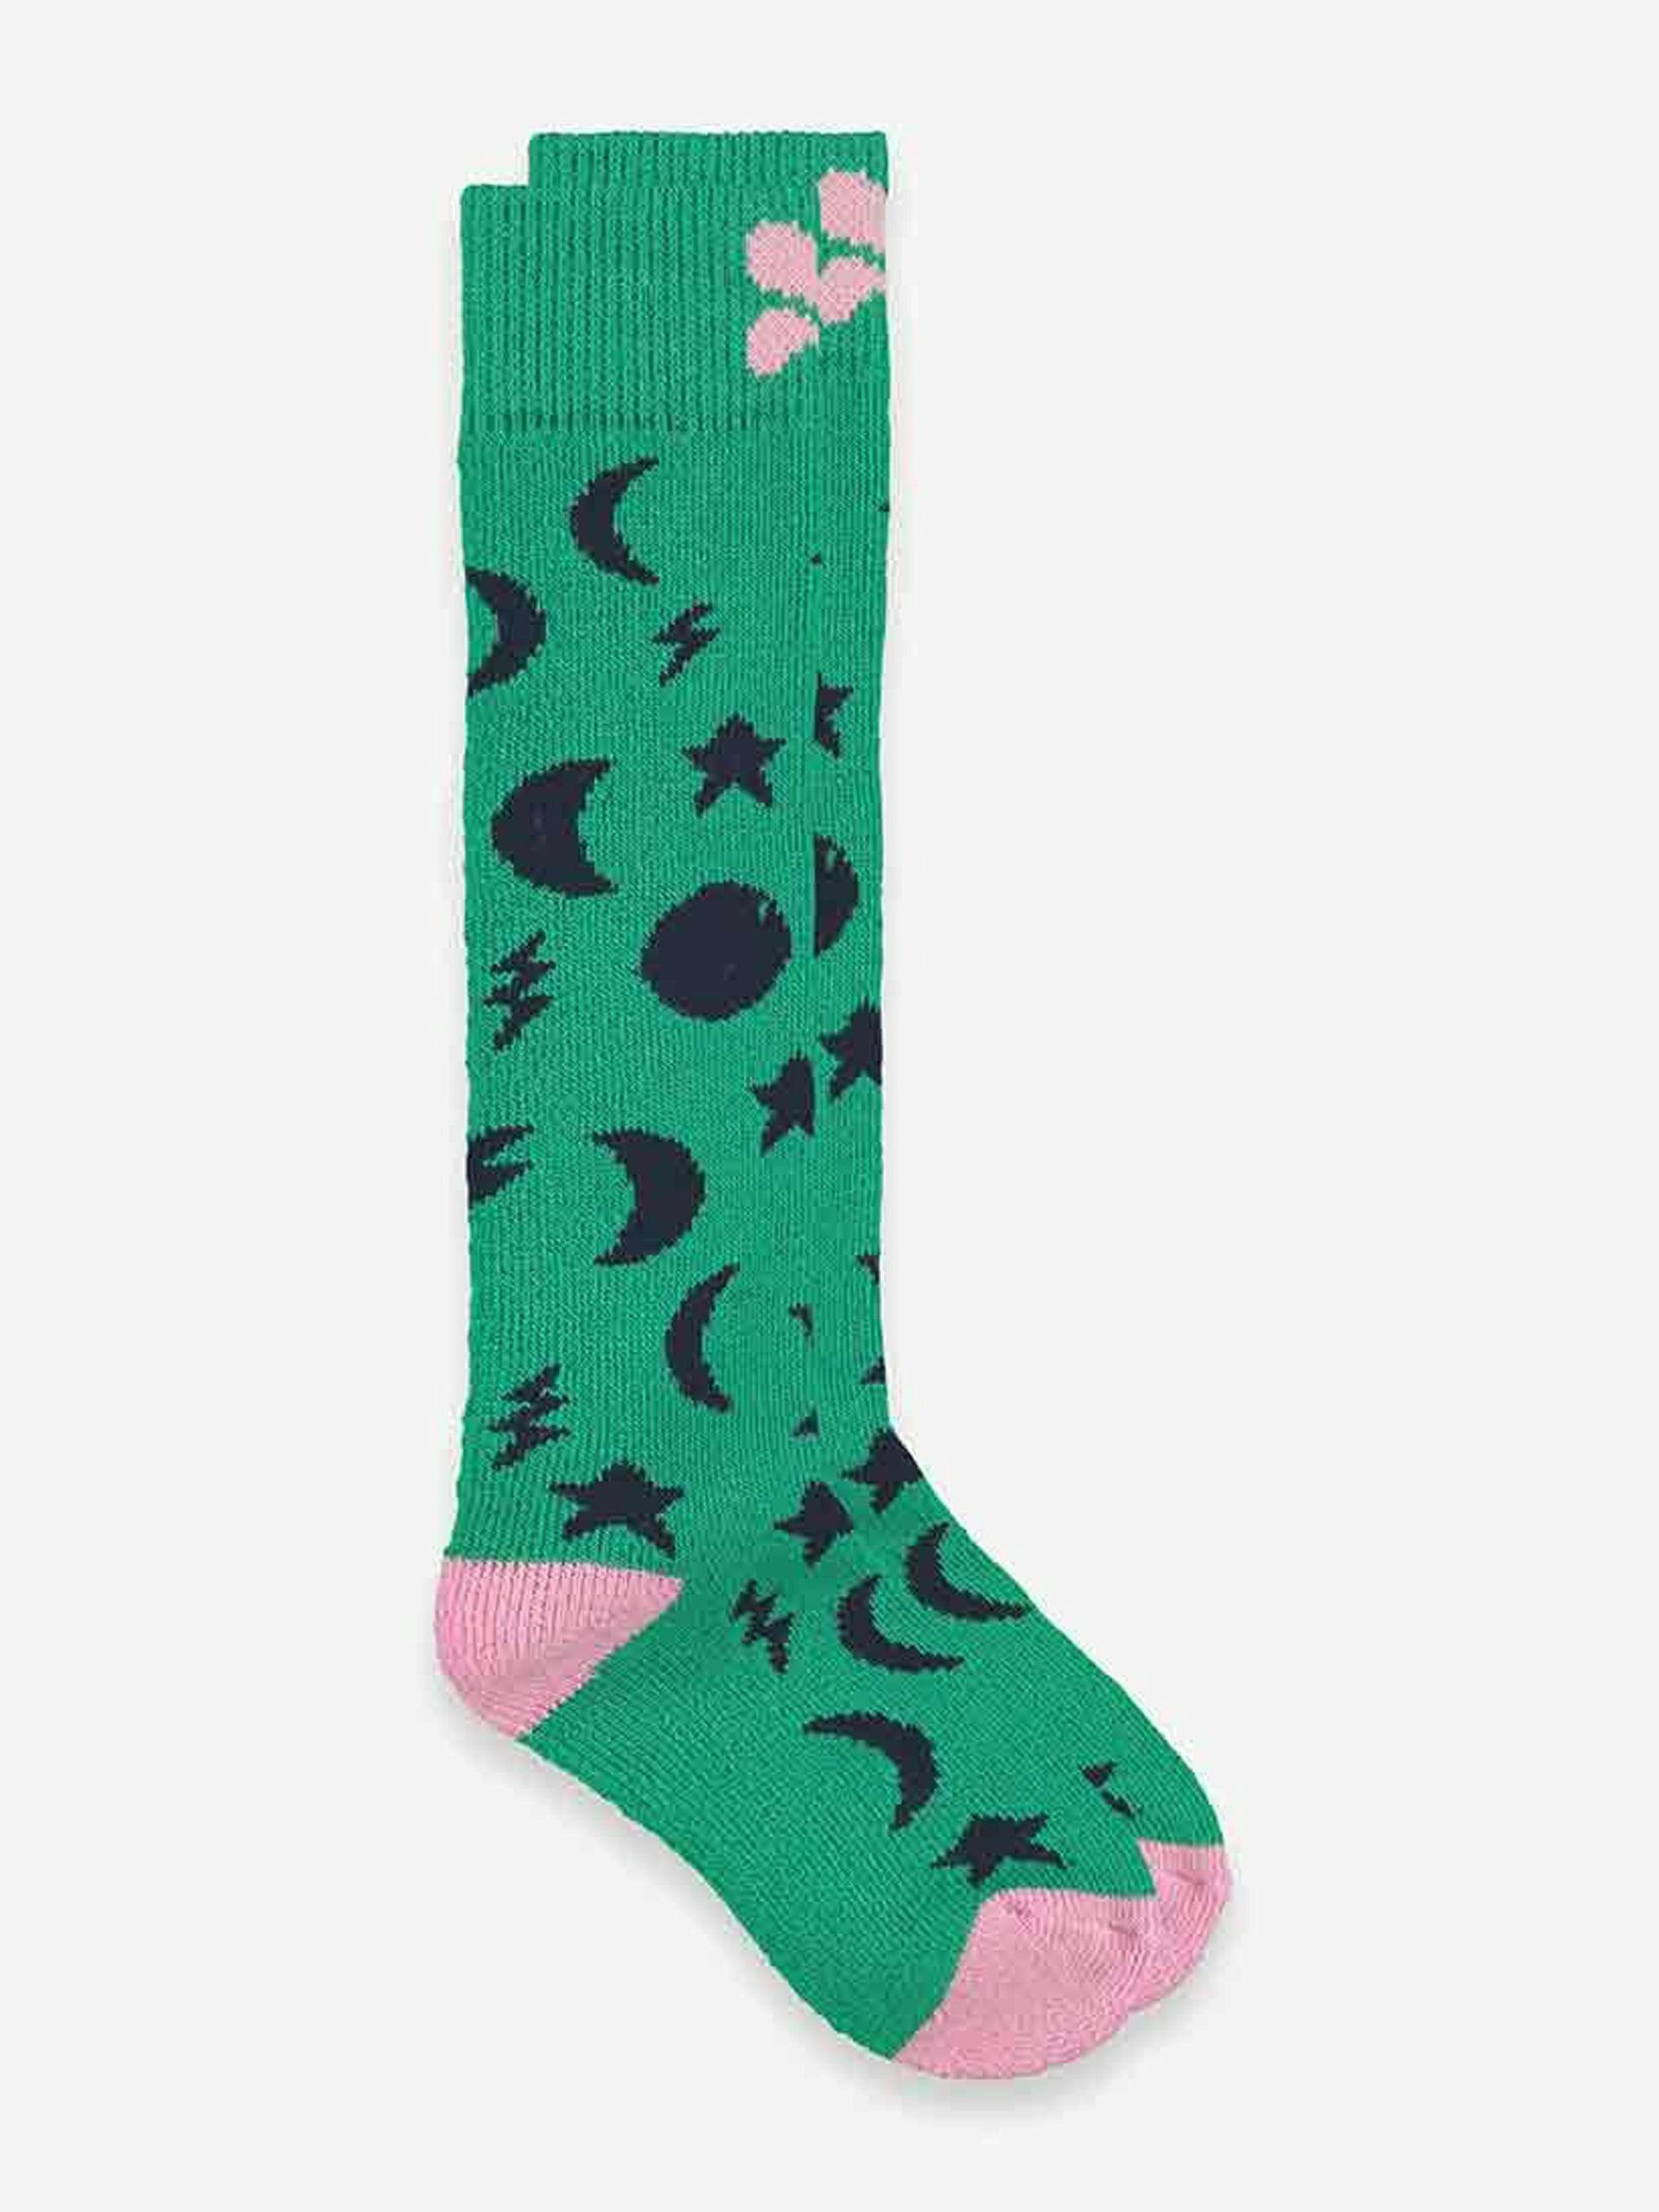 Green patterned socks